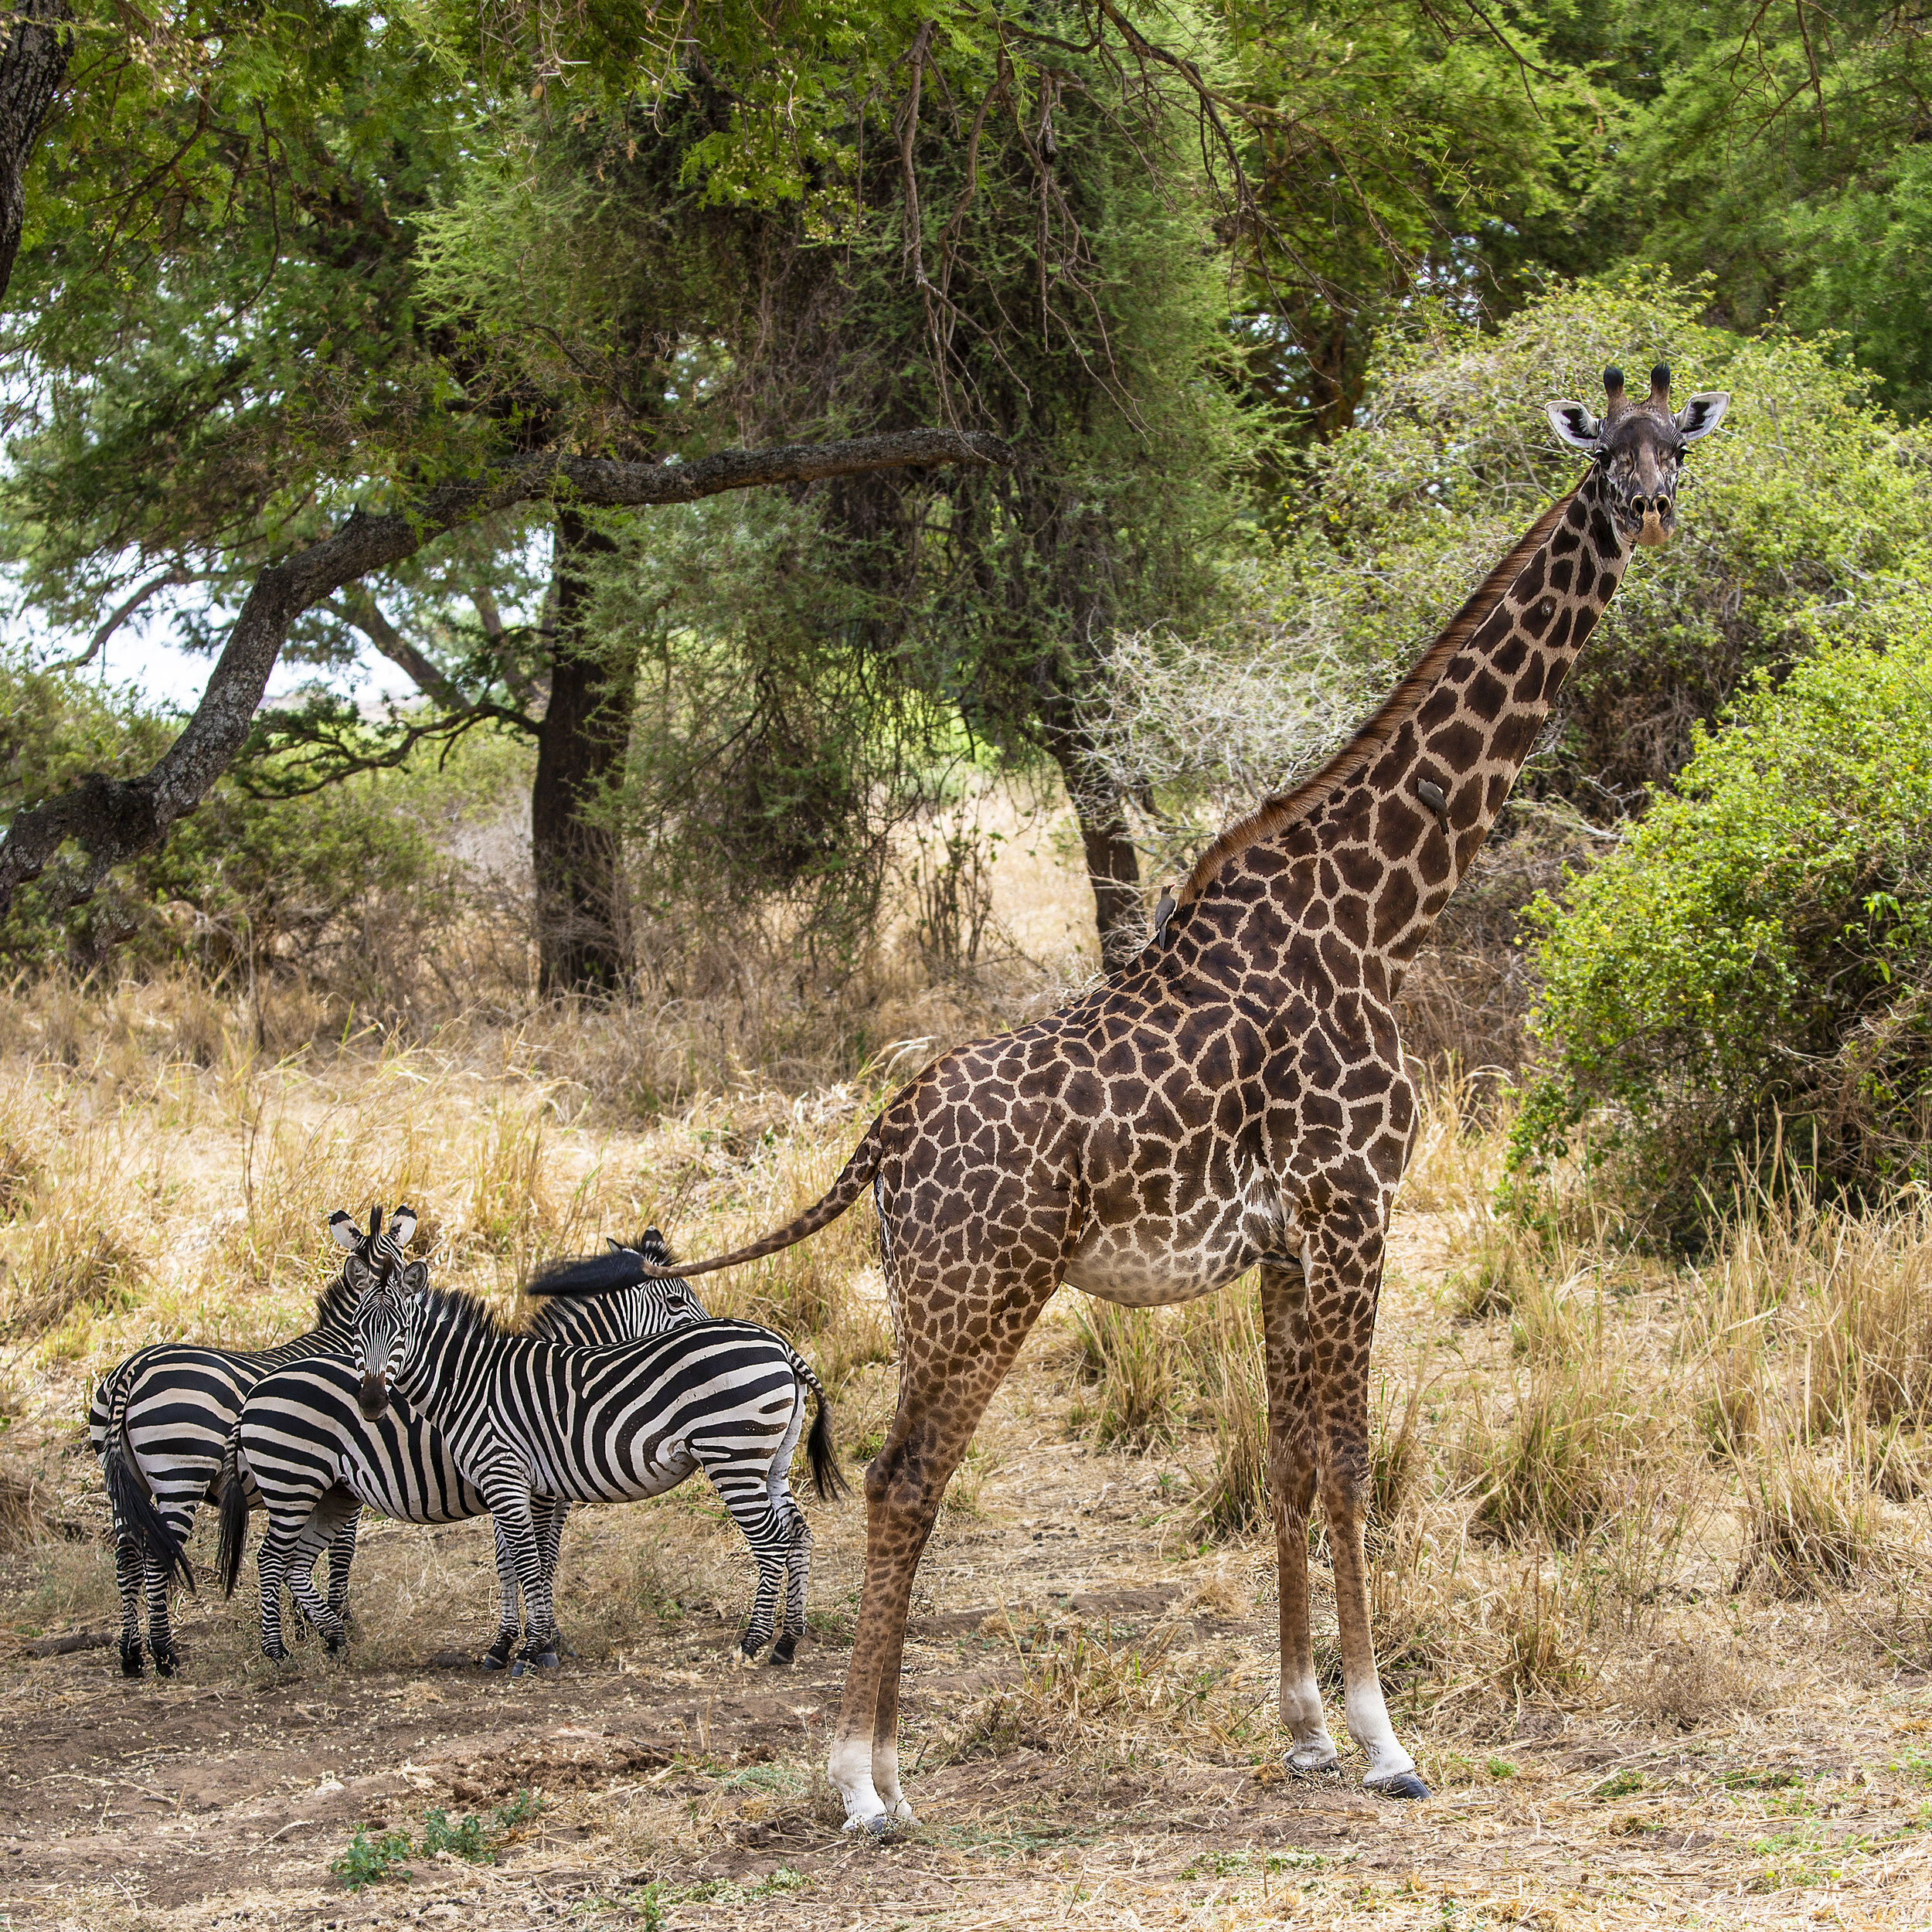 Zebras &amp; Giraffe at Tarangire National Park